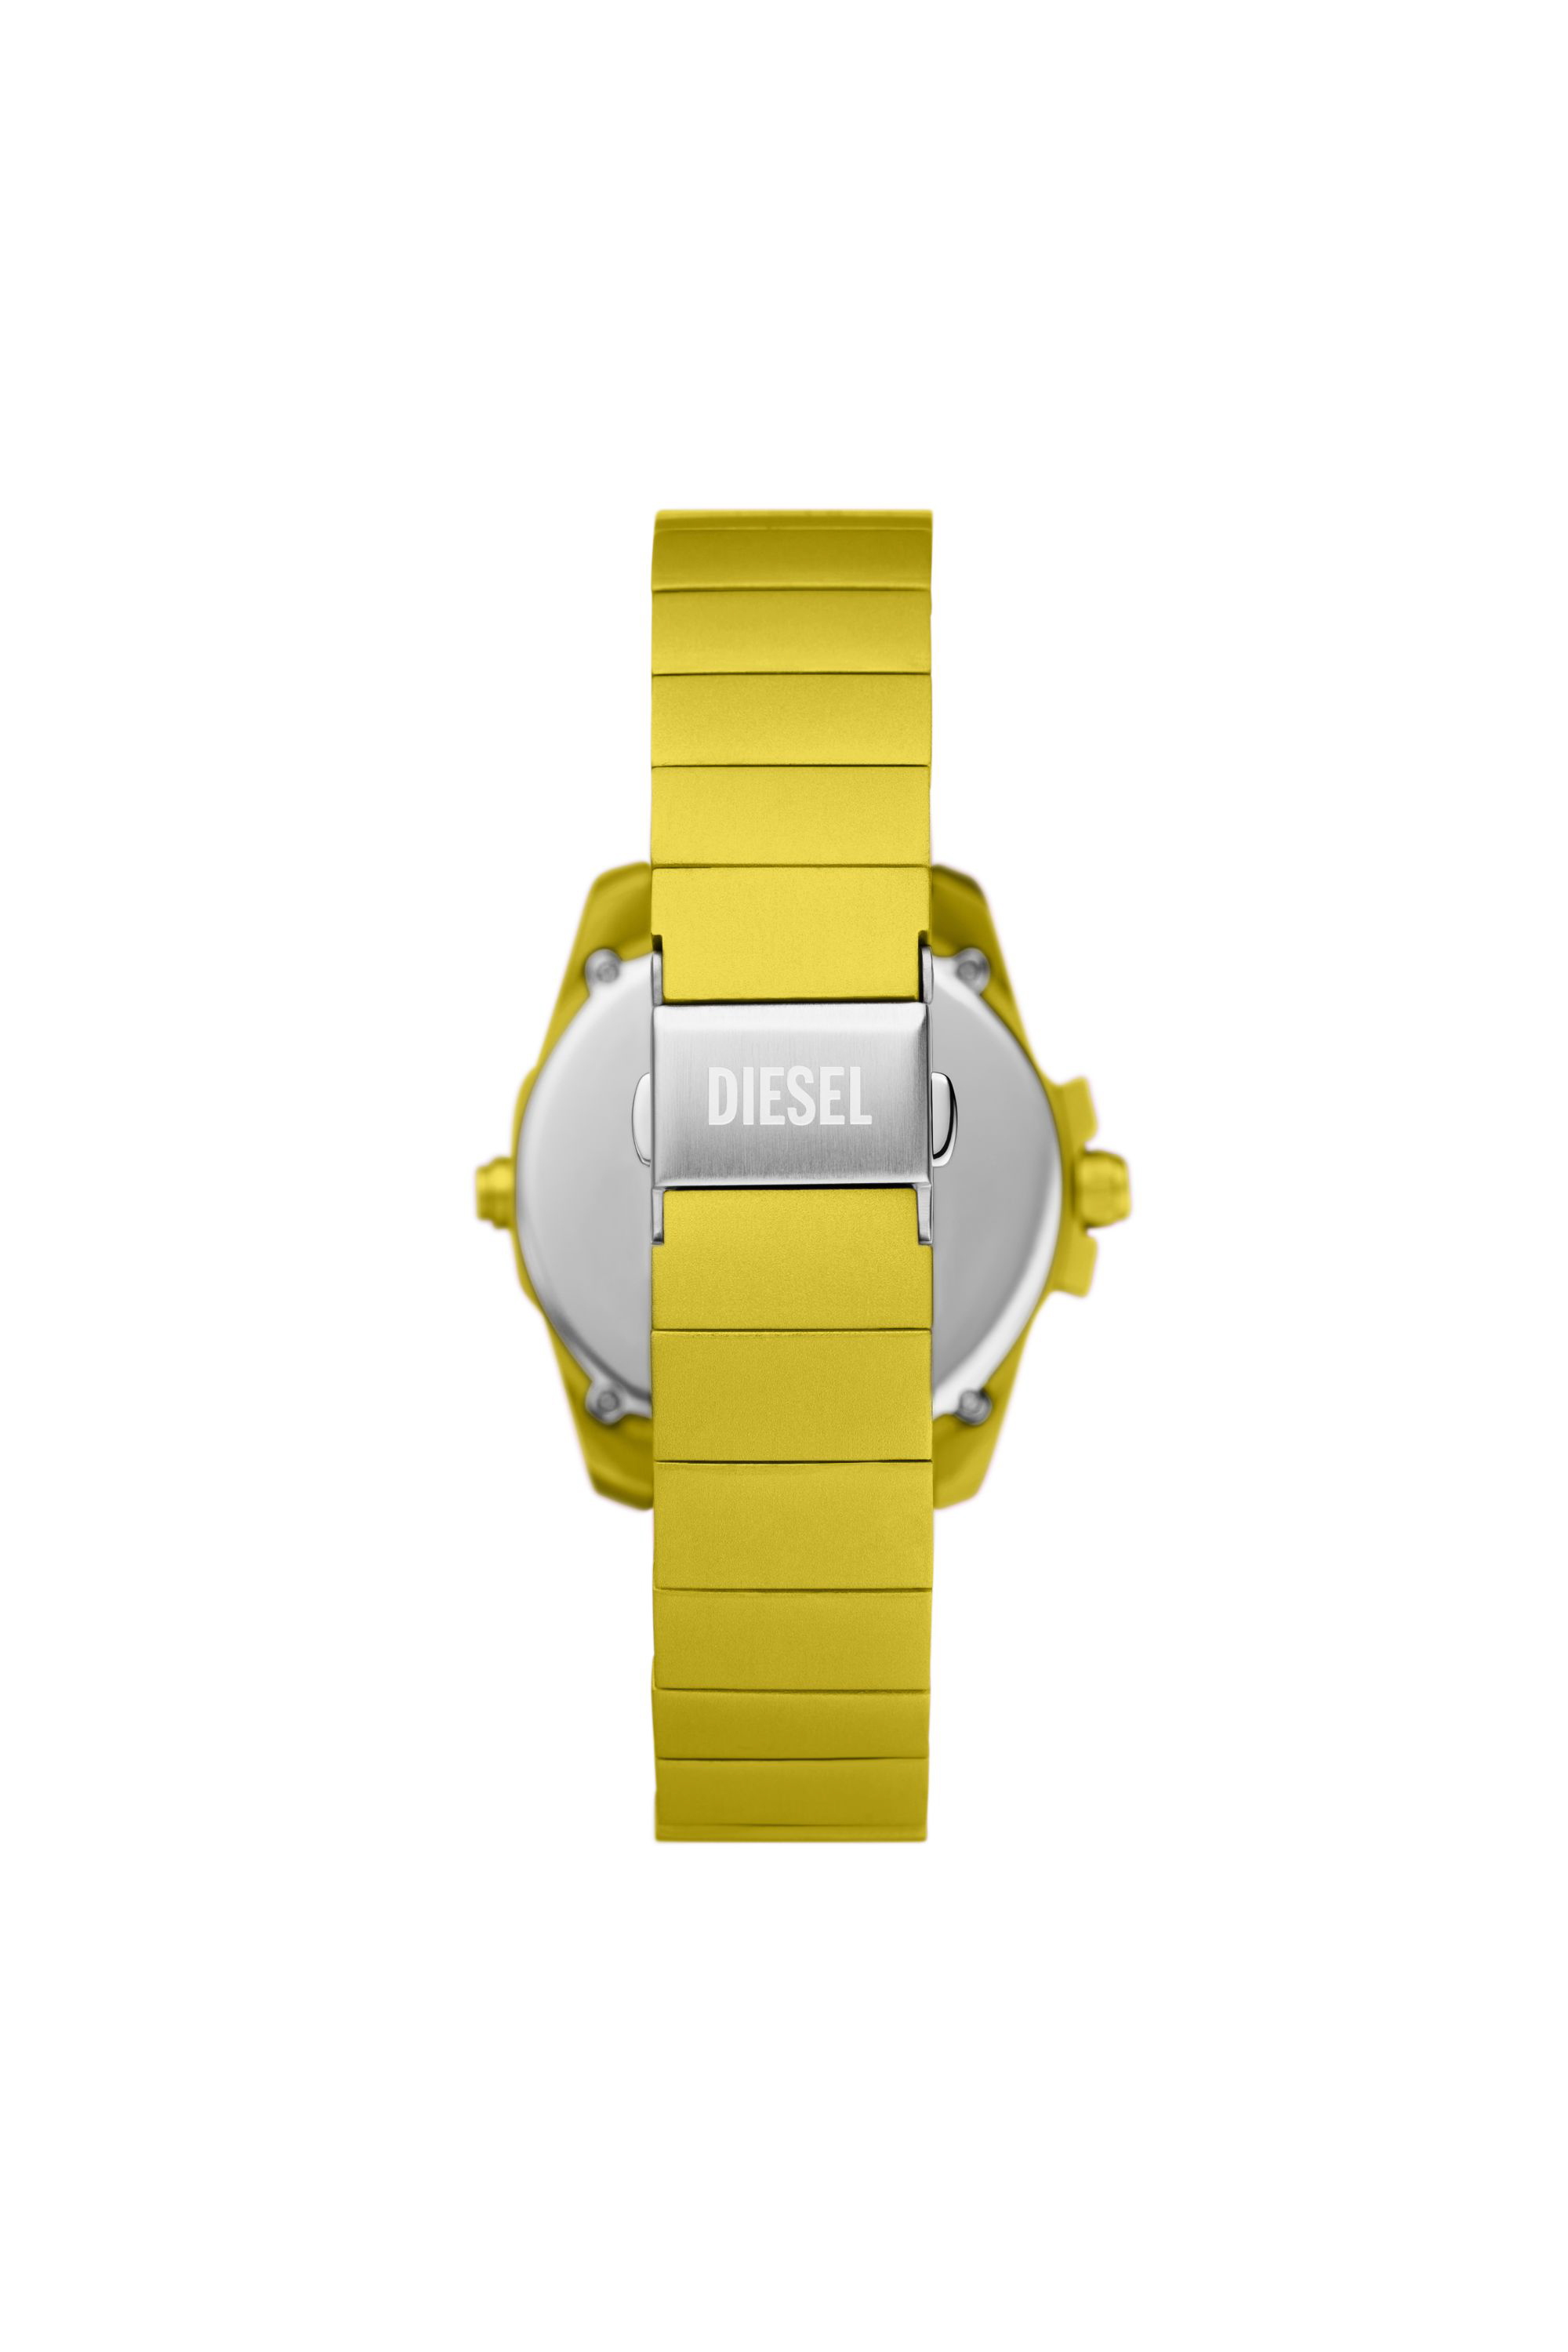 Diesel - DZ2207 WATCH, Male Baby chief digital yellow aluminum watch in イエロー - Image 2